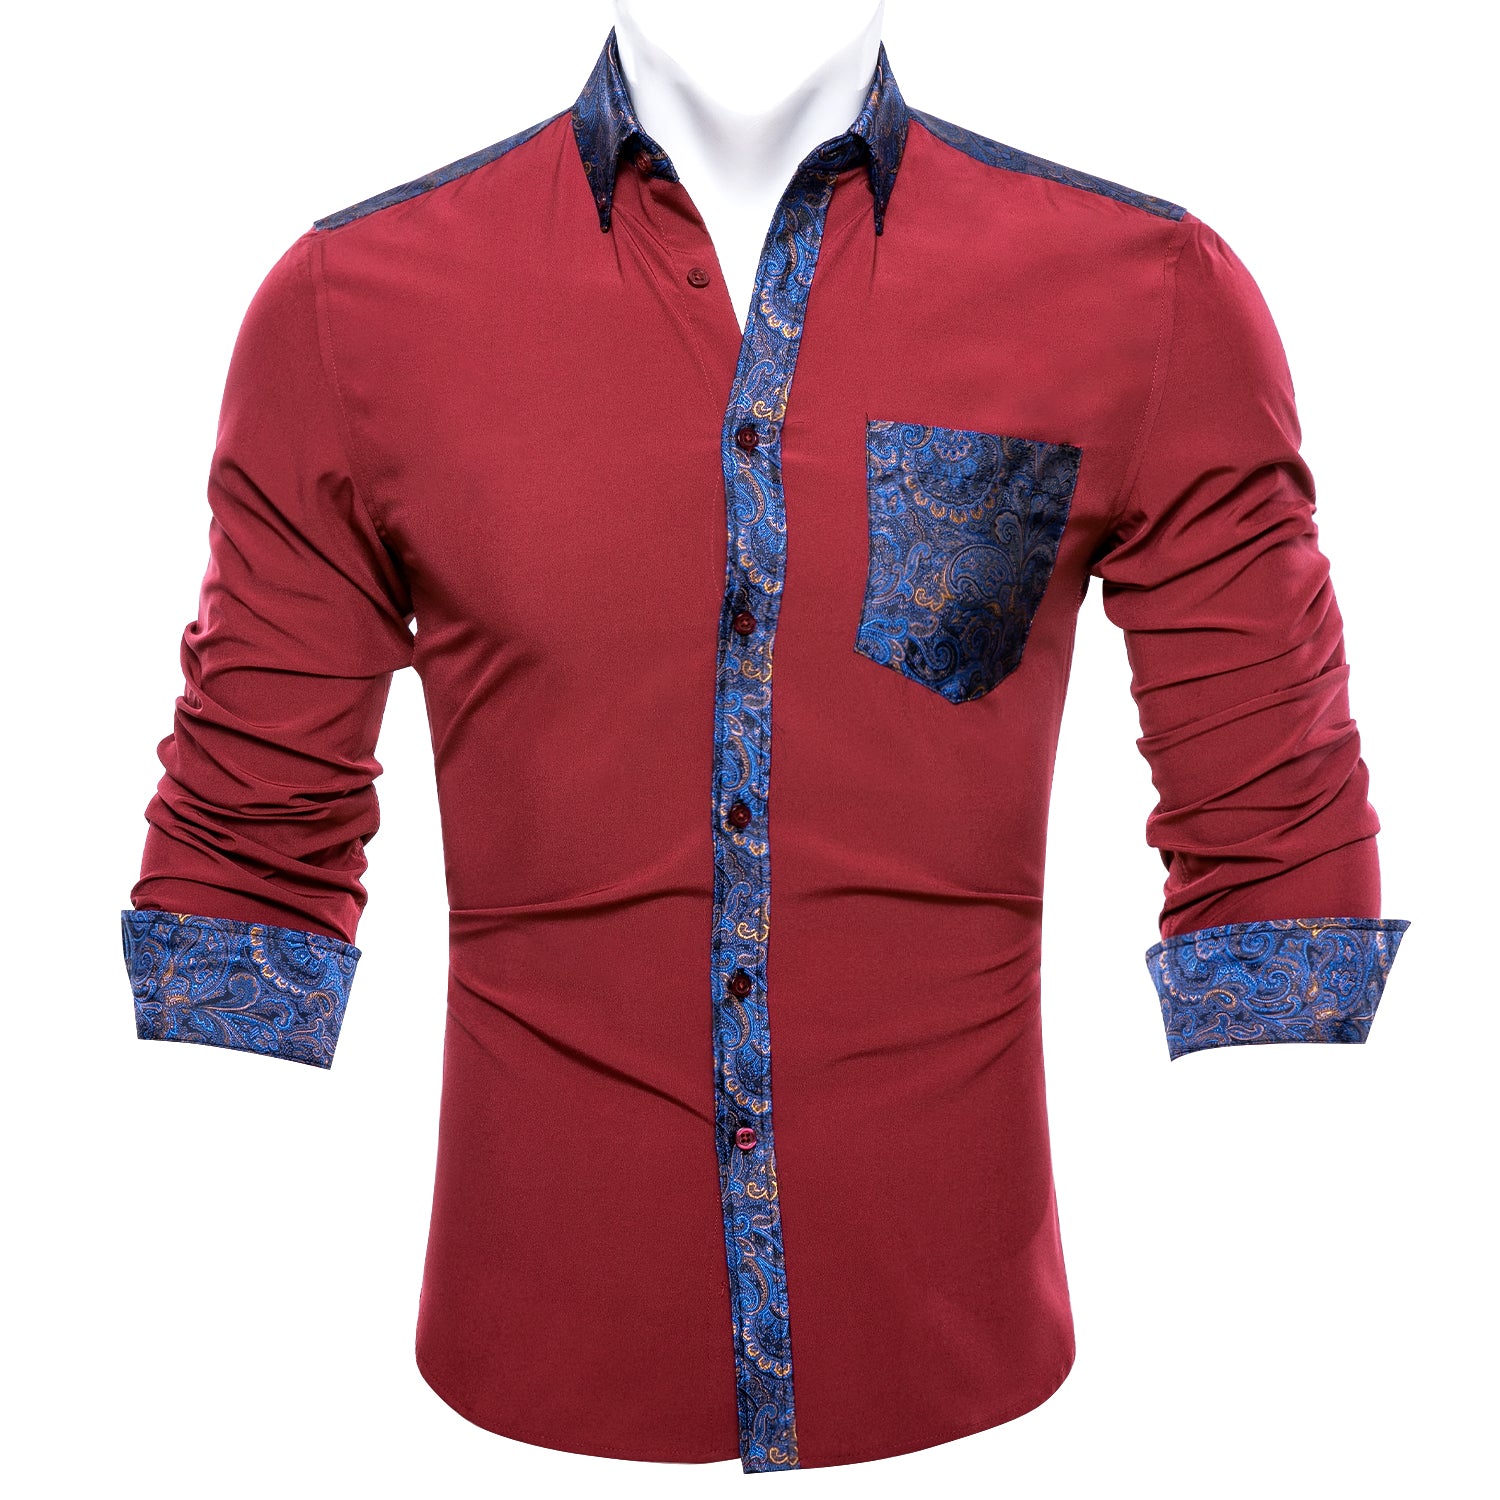 Barry.wang Red Blue Color contrast Silk Men's Shirt